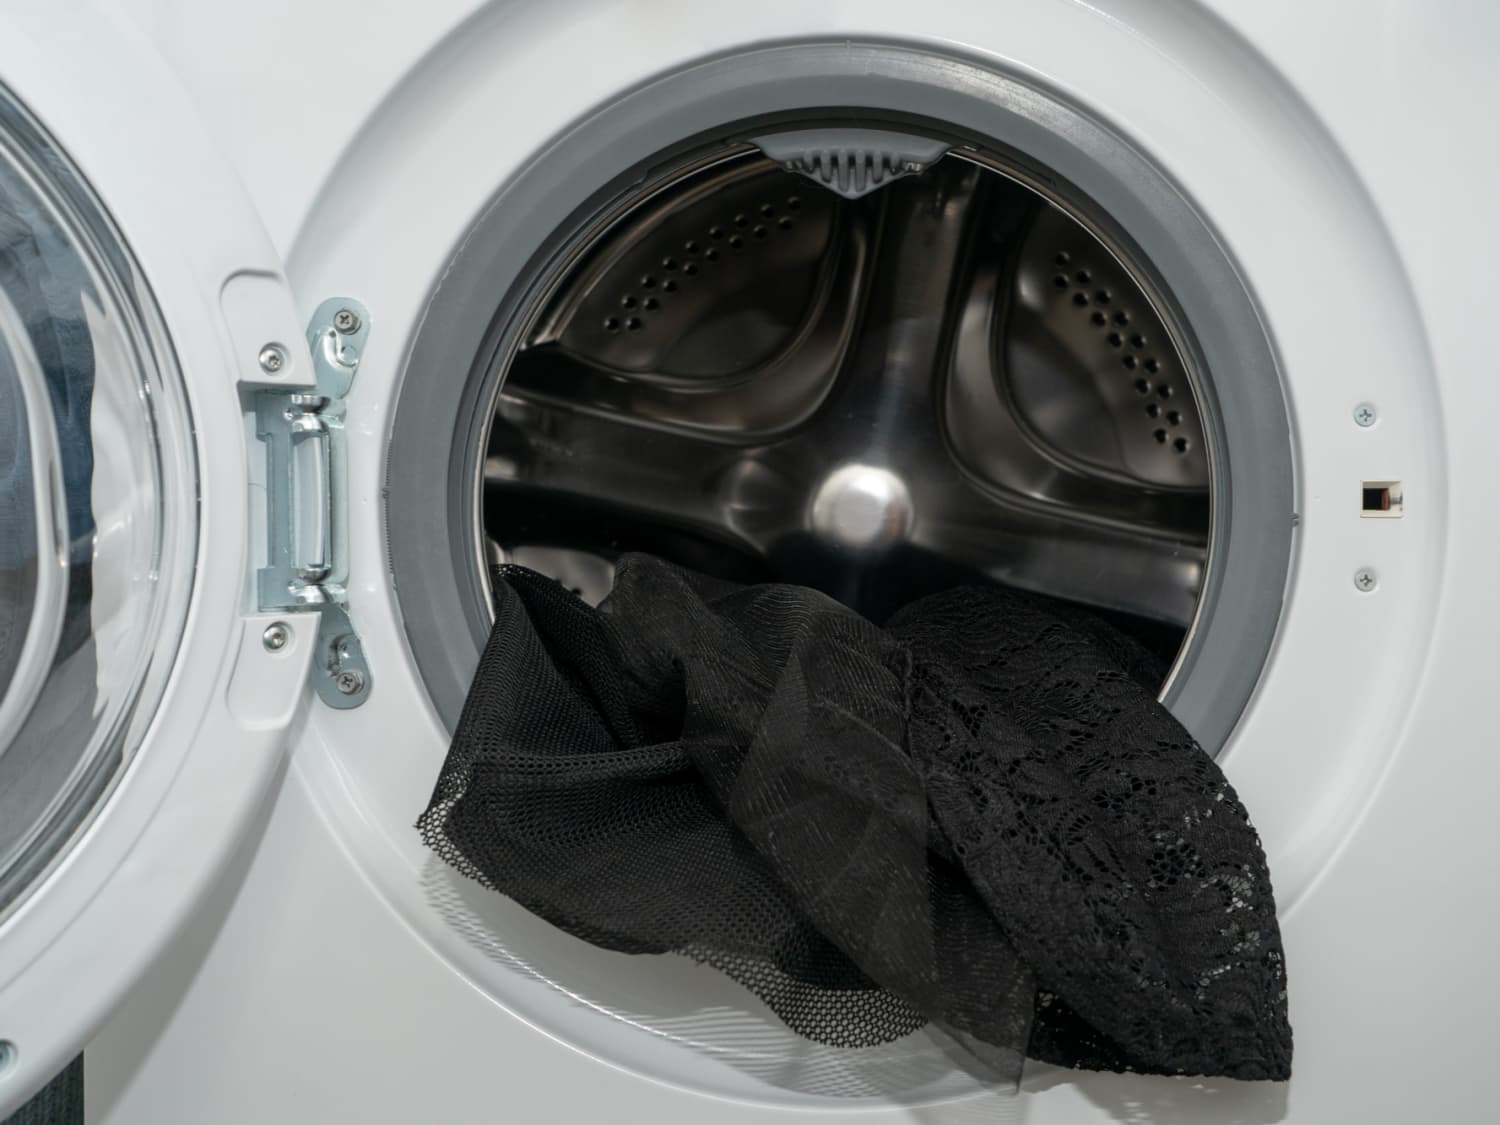 https://cdn.apartmenttherapy.info/image/upload/f_jpg,q_auto:eco,c_fill,g_auto,w_1500,ar_4:3/dry-clean-machine-wash